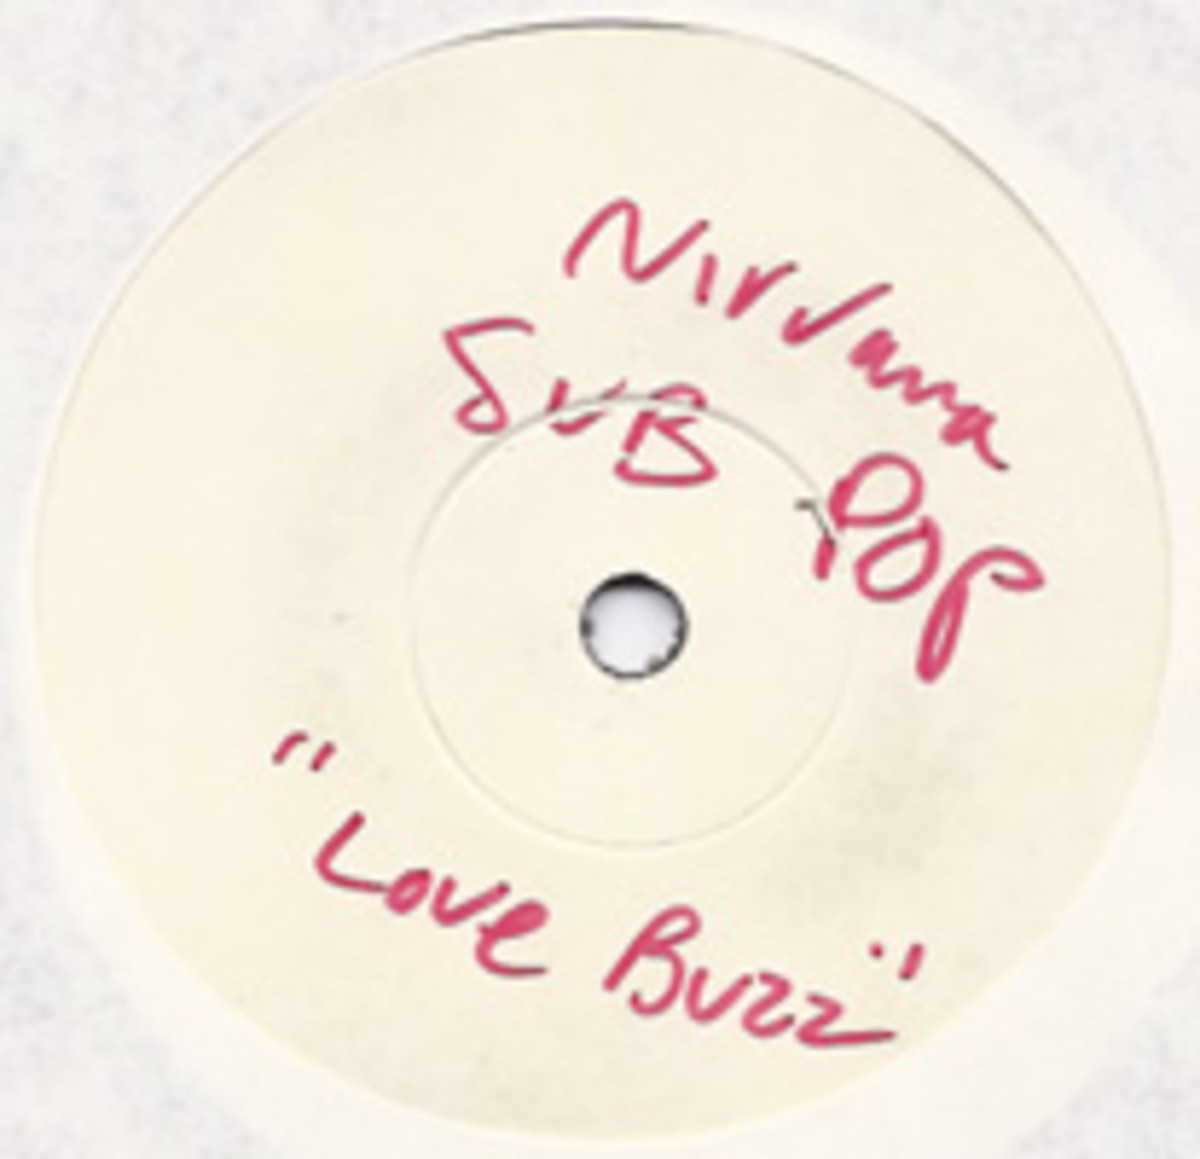 Nirvana Sub Pop Love Buzz 7-inch test pressing